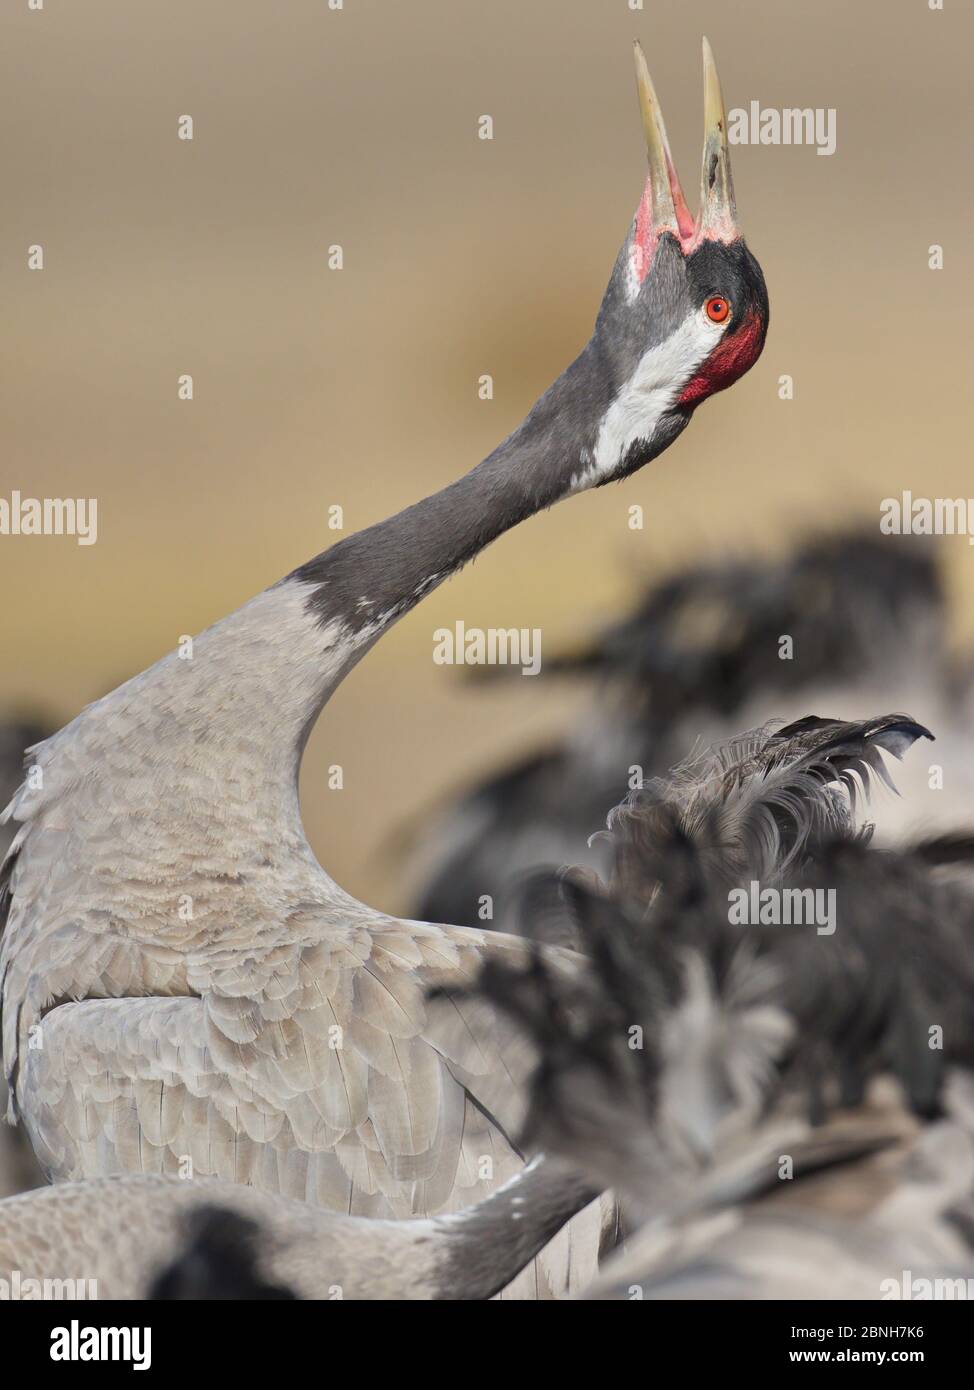 Gallocanta,Zaragoza/Spain; Feb.11, 2019. The migratory passage of the Common Crane (Grus grus) through the Gallocanta Lagoon. In the image a energetic Stock Photo